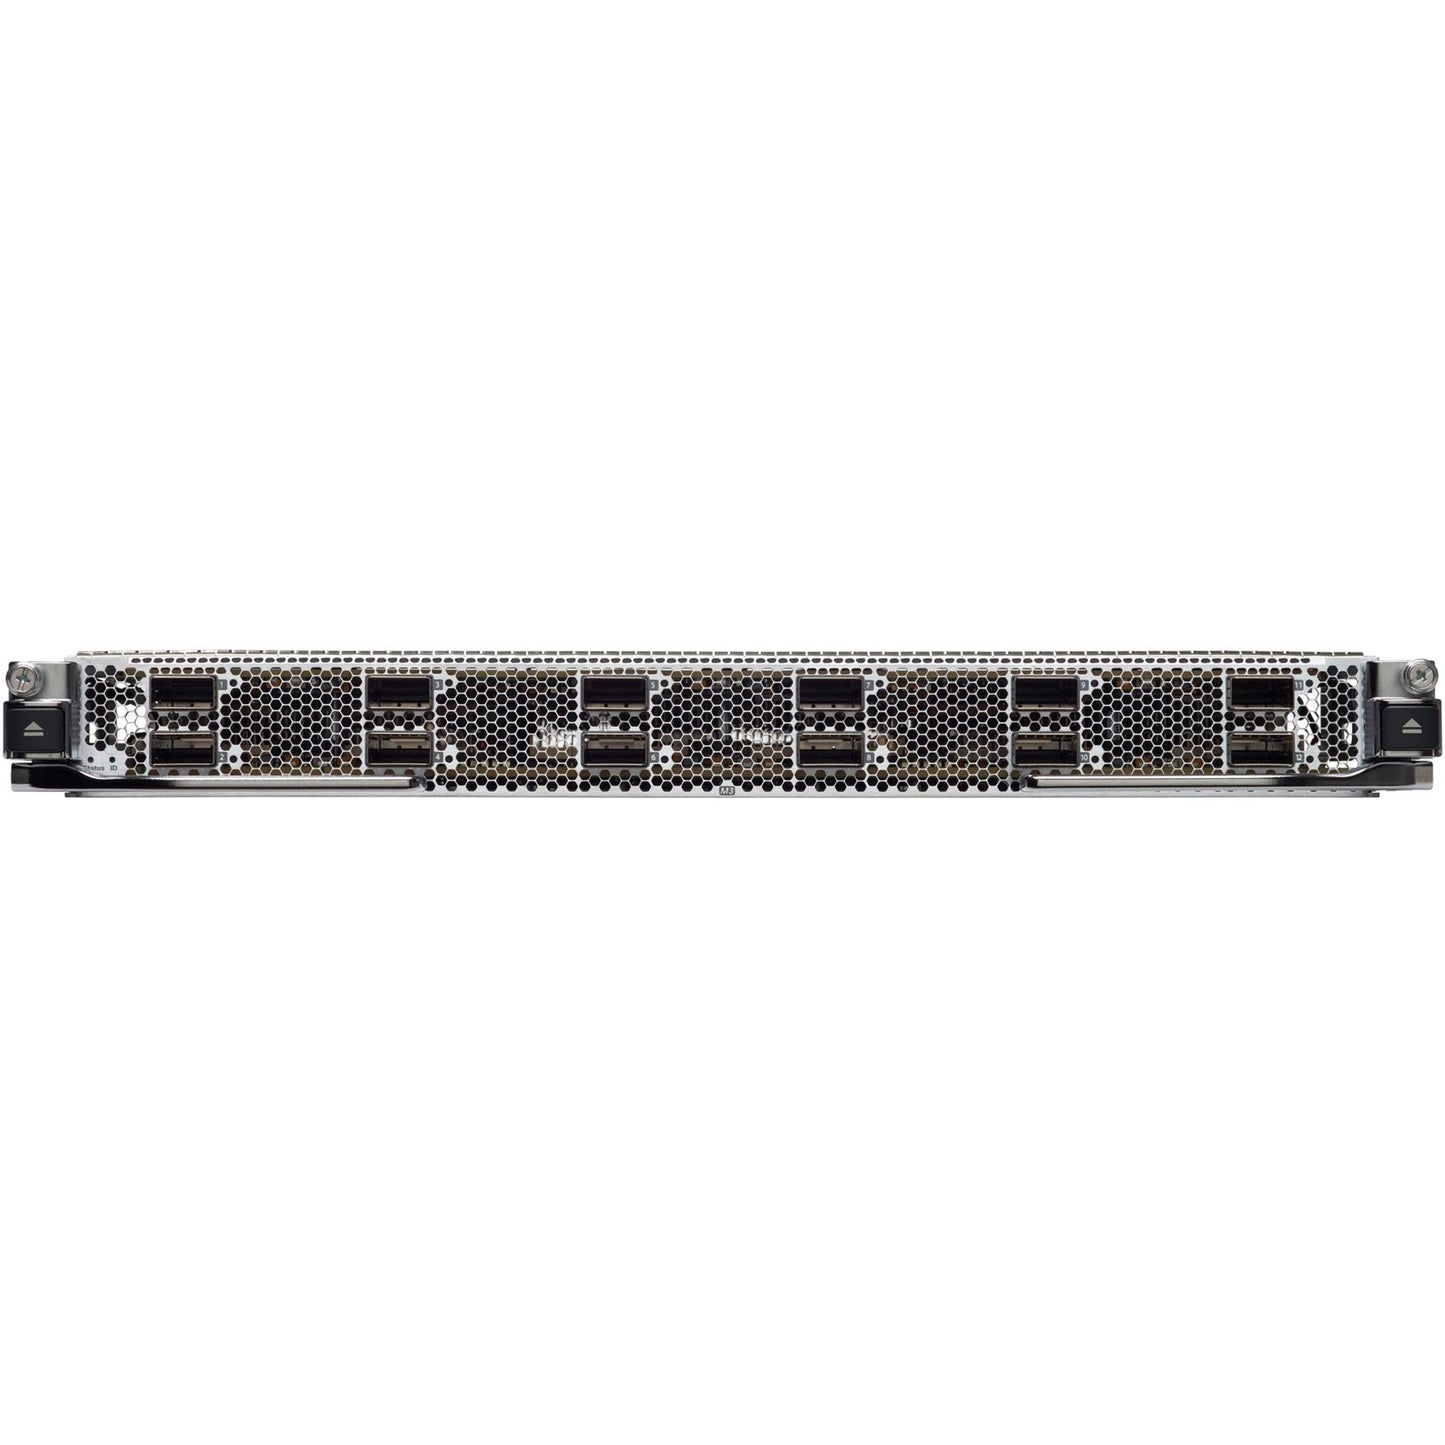 Cisco Nexus 7700 M3-Series 12-Port 100 Gigabit Ethernet Module